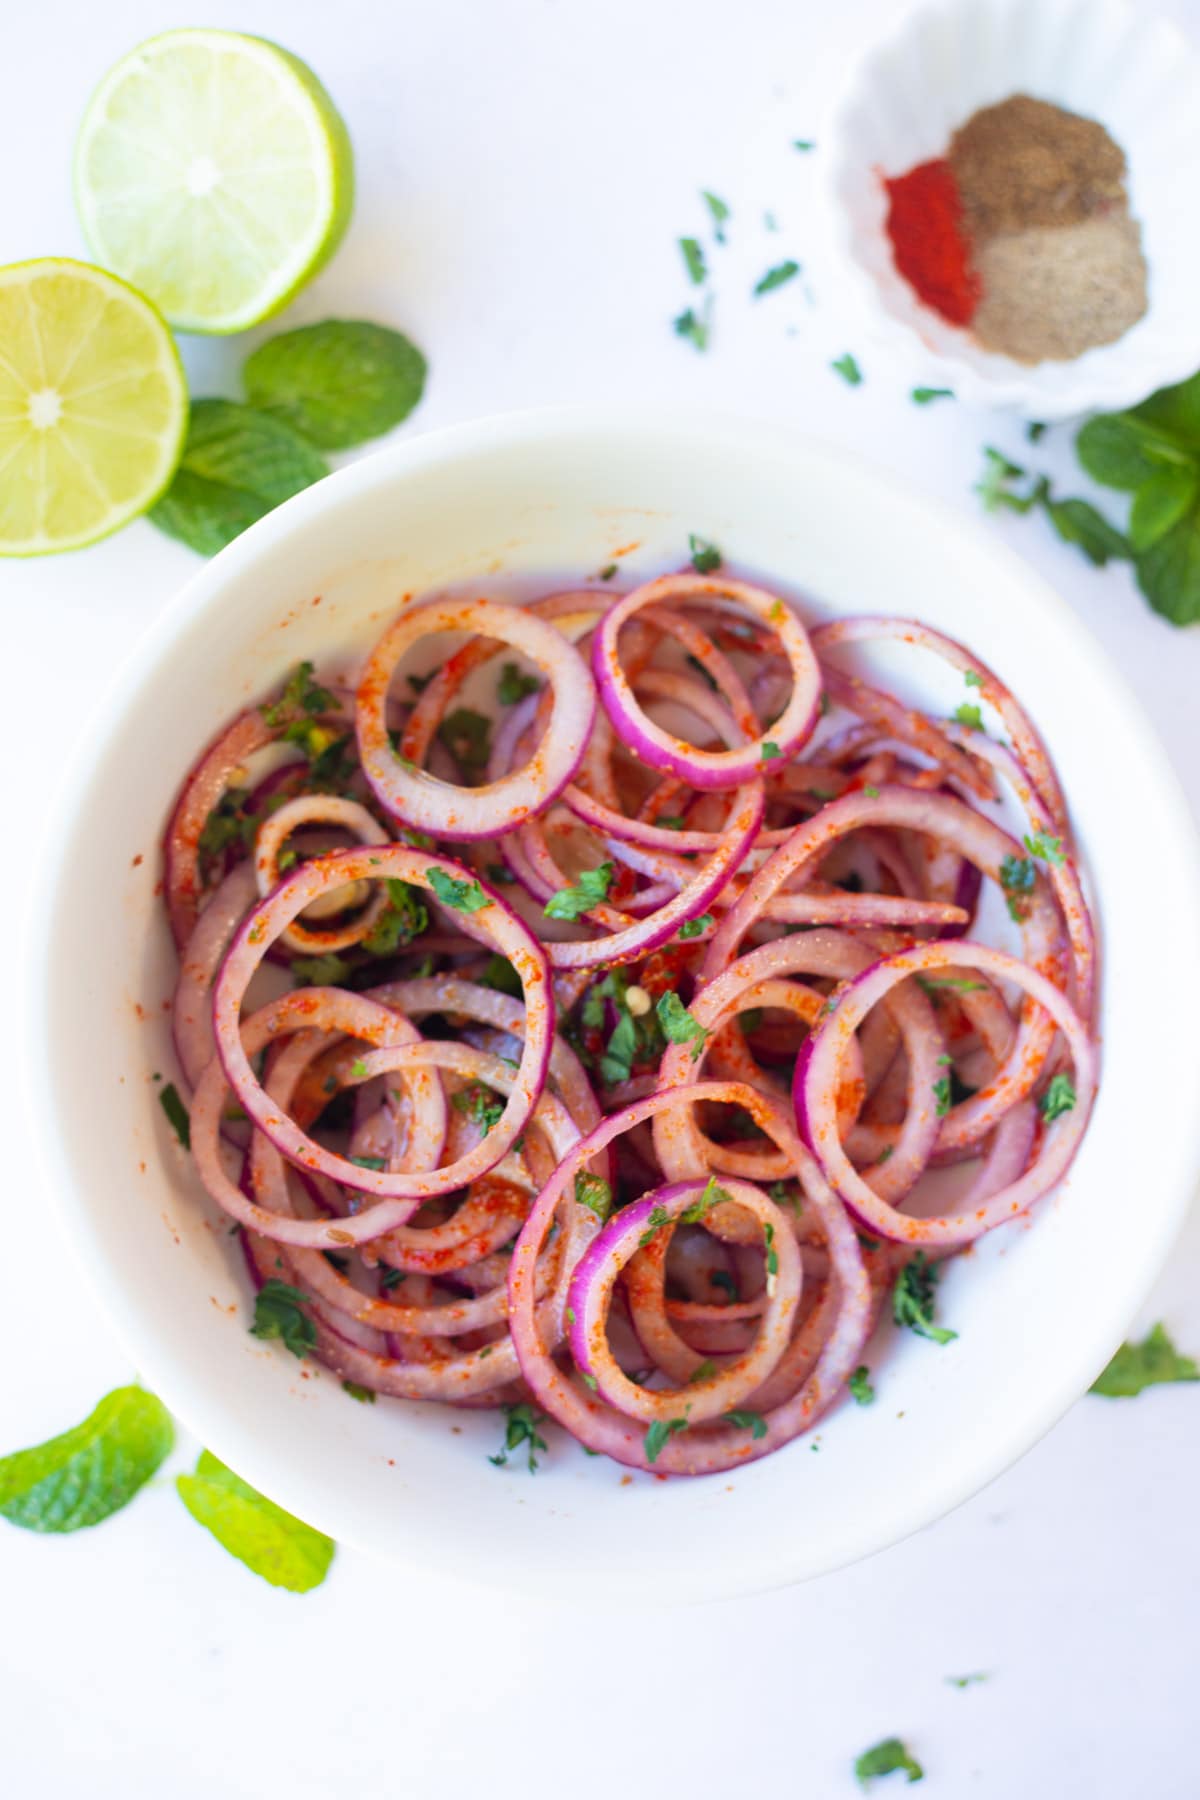 Laccha Pyaaz (indian onion salad) ina bowl garnished with cilantro  